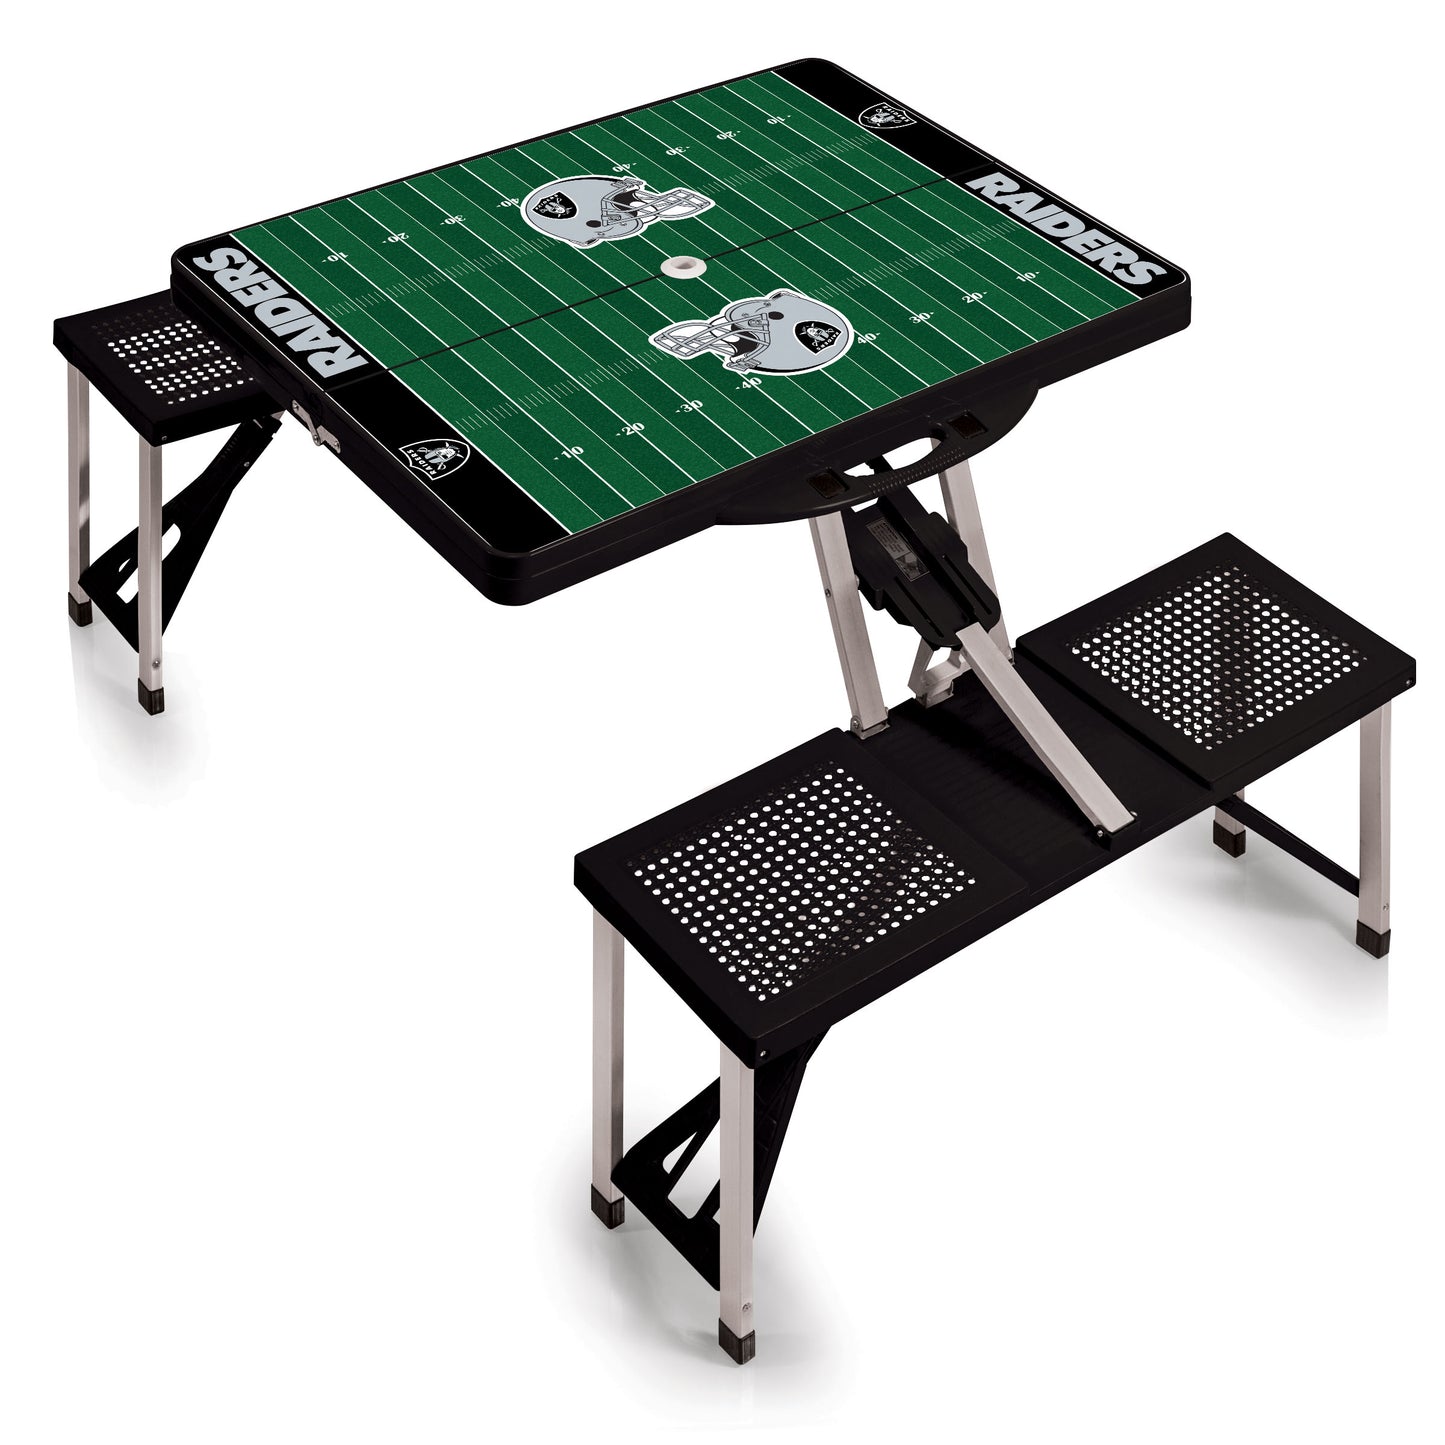 Las Vegas Raiders - Picnic Table Portable Folding Table with Seats - Football Field